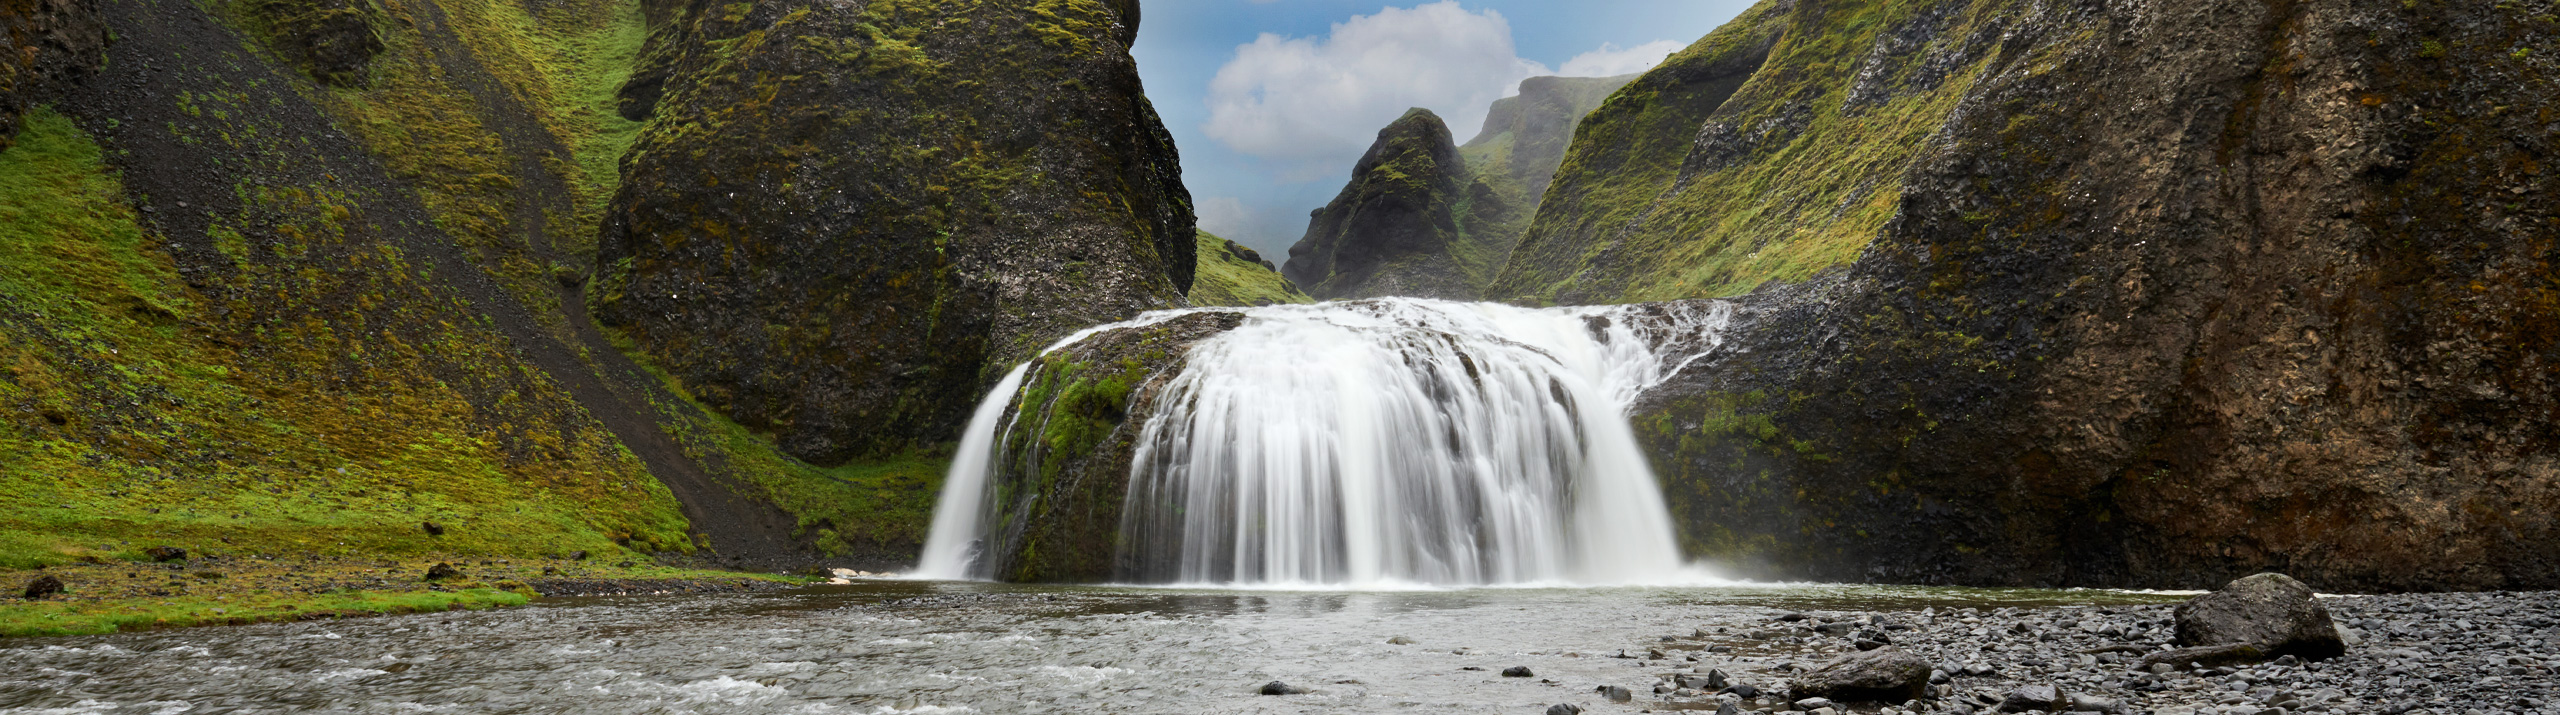 Stjórnarfoss vandfaldet - vandfald i Island- vandfald i Island